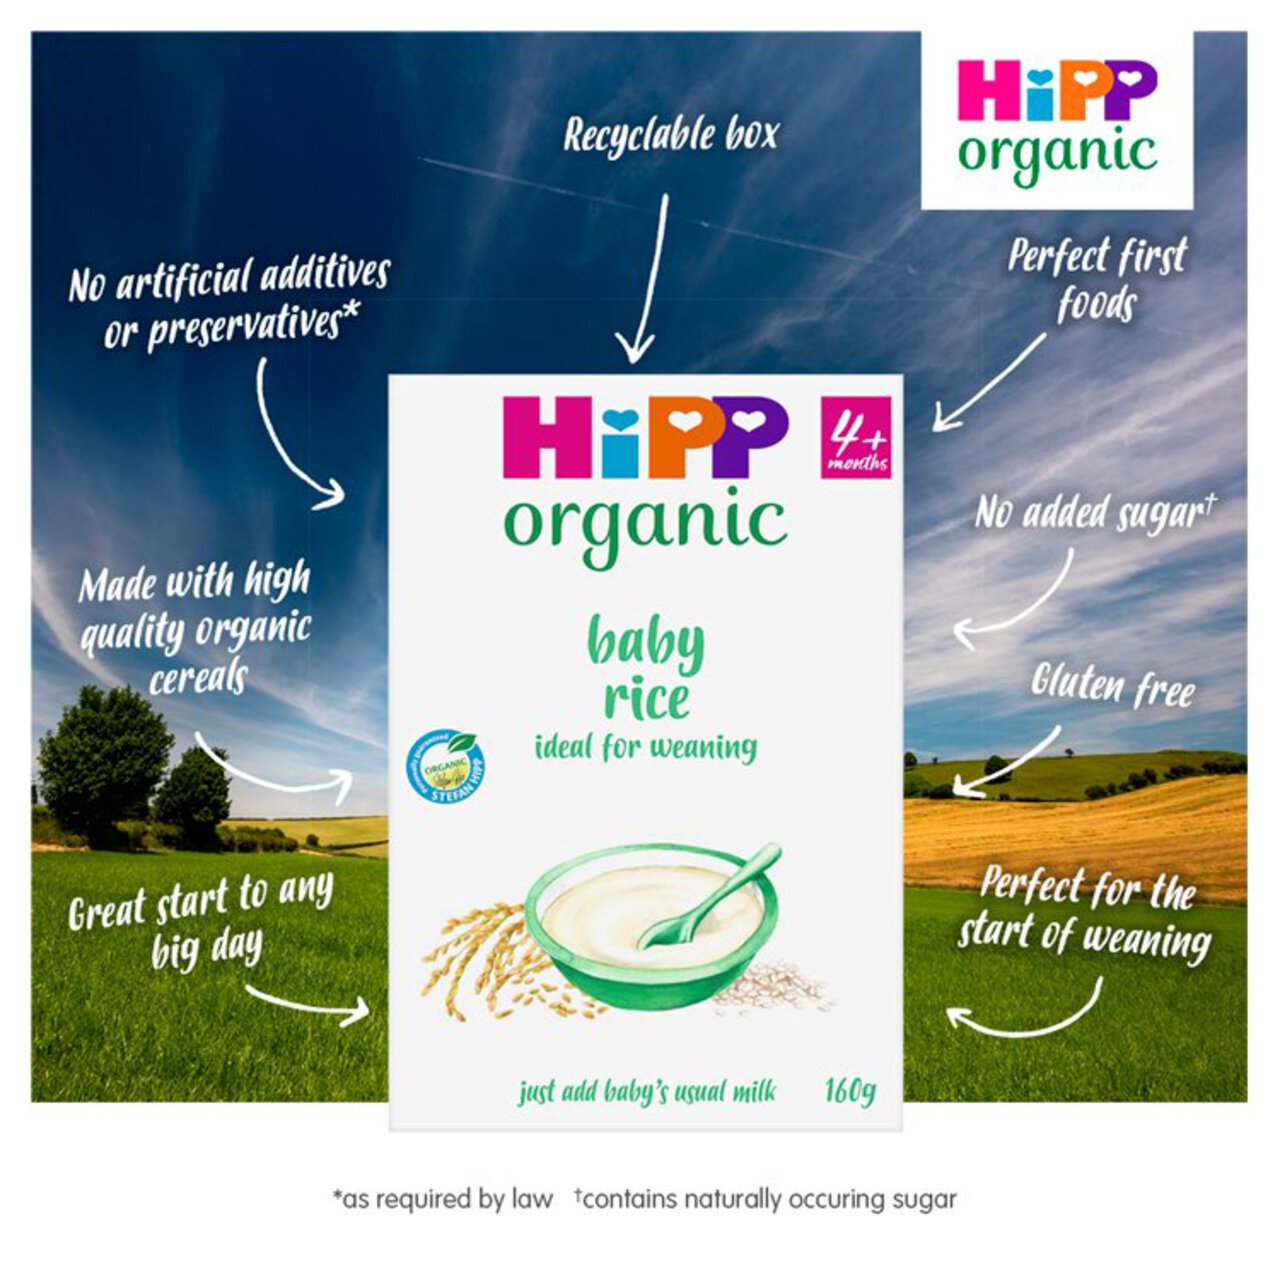 HiPP Organic Baby Rice, 4 mths+ 160g